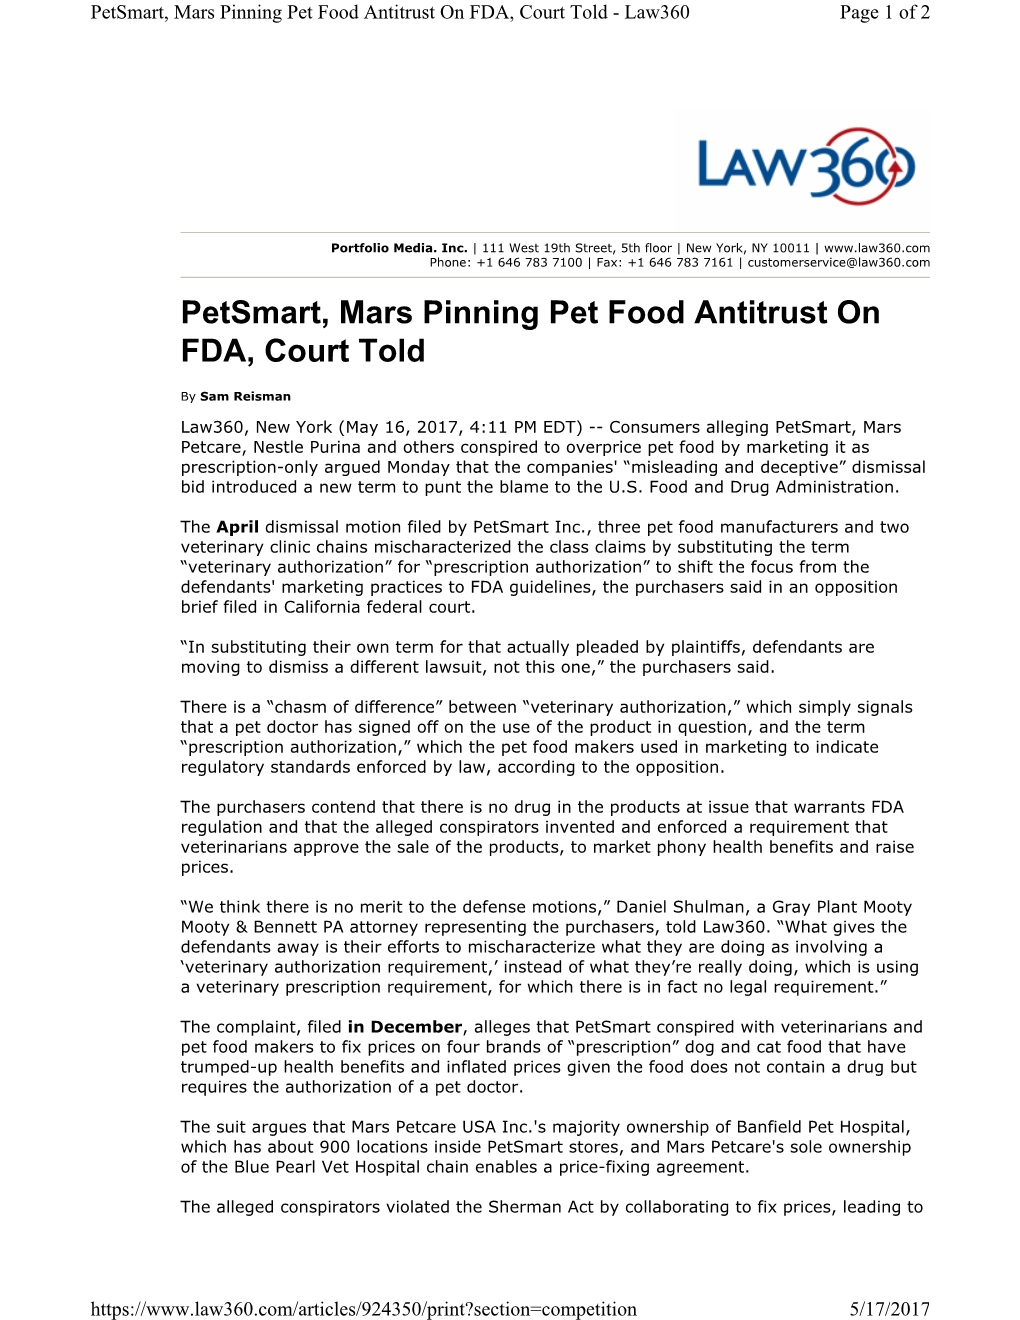 Petsmart, Mars Pinning Pet Food Antitrust on FDA, Court Told - Law360 Page 1 of 2